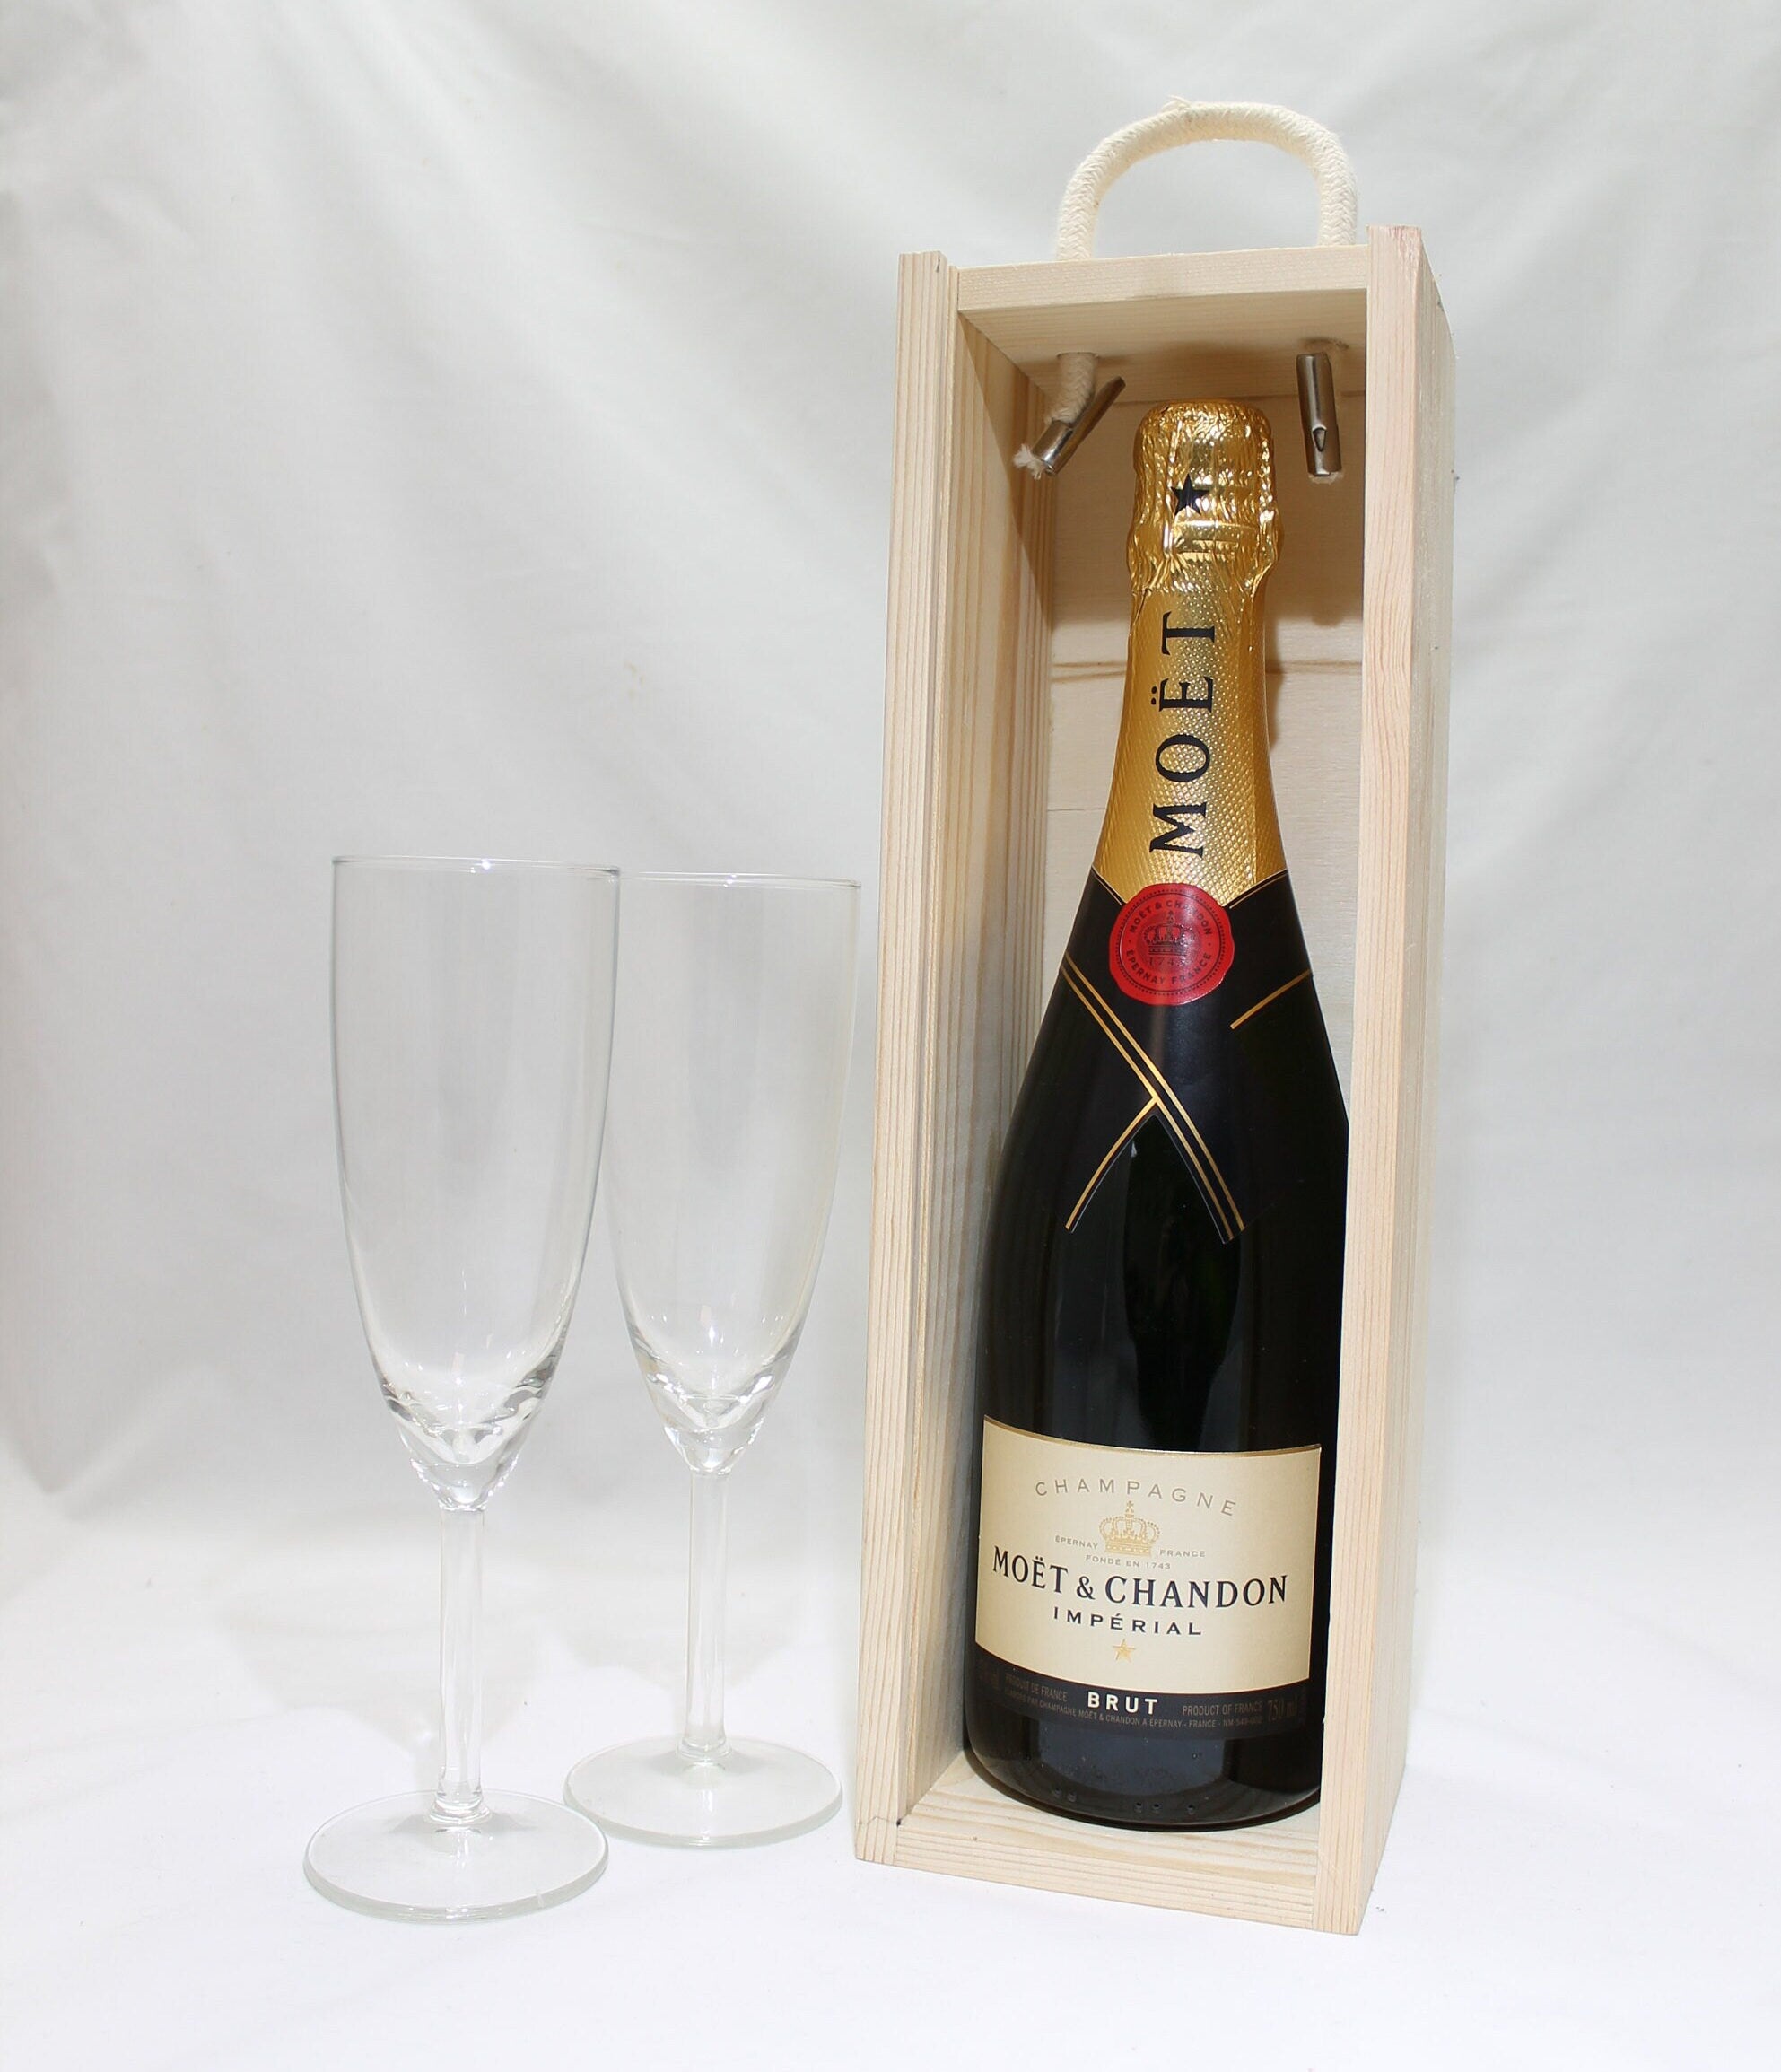 Personalised Birthday Bottle Box Customised Birthday Gift Present Personalised Birthday Champagne Wooden Bottle Box Gifts